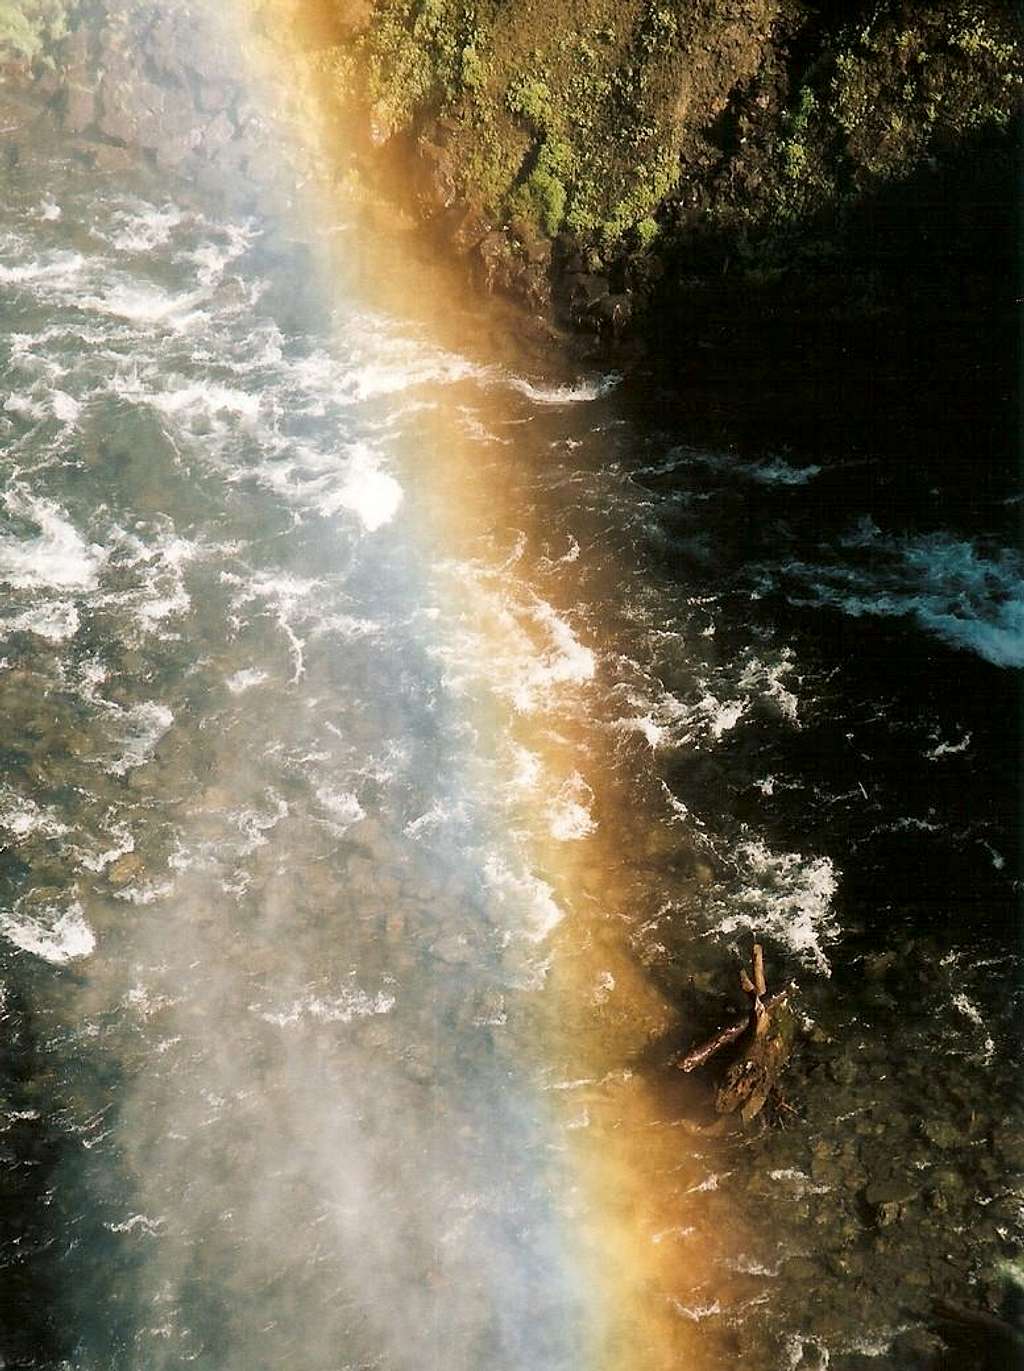 Below Rainbow Falls